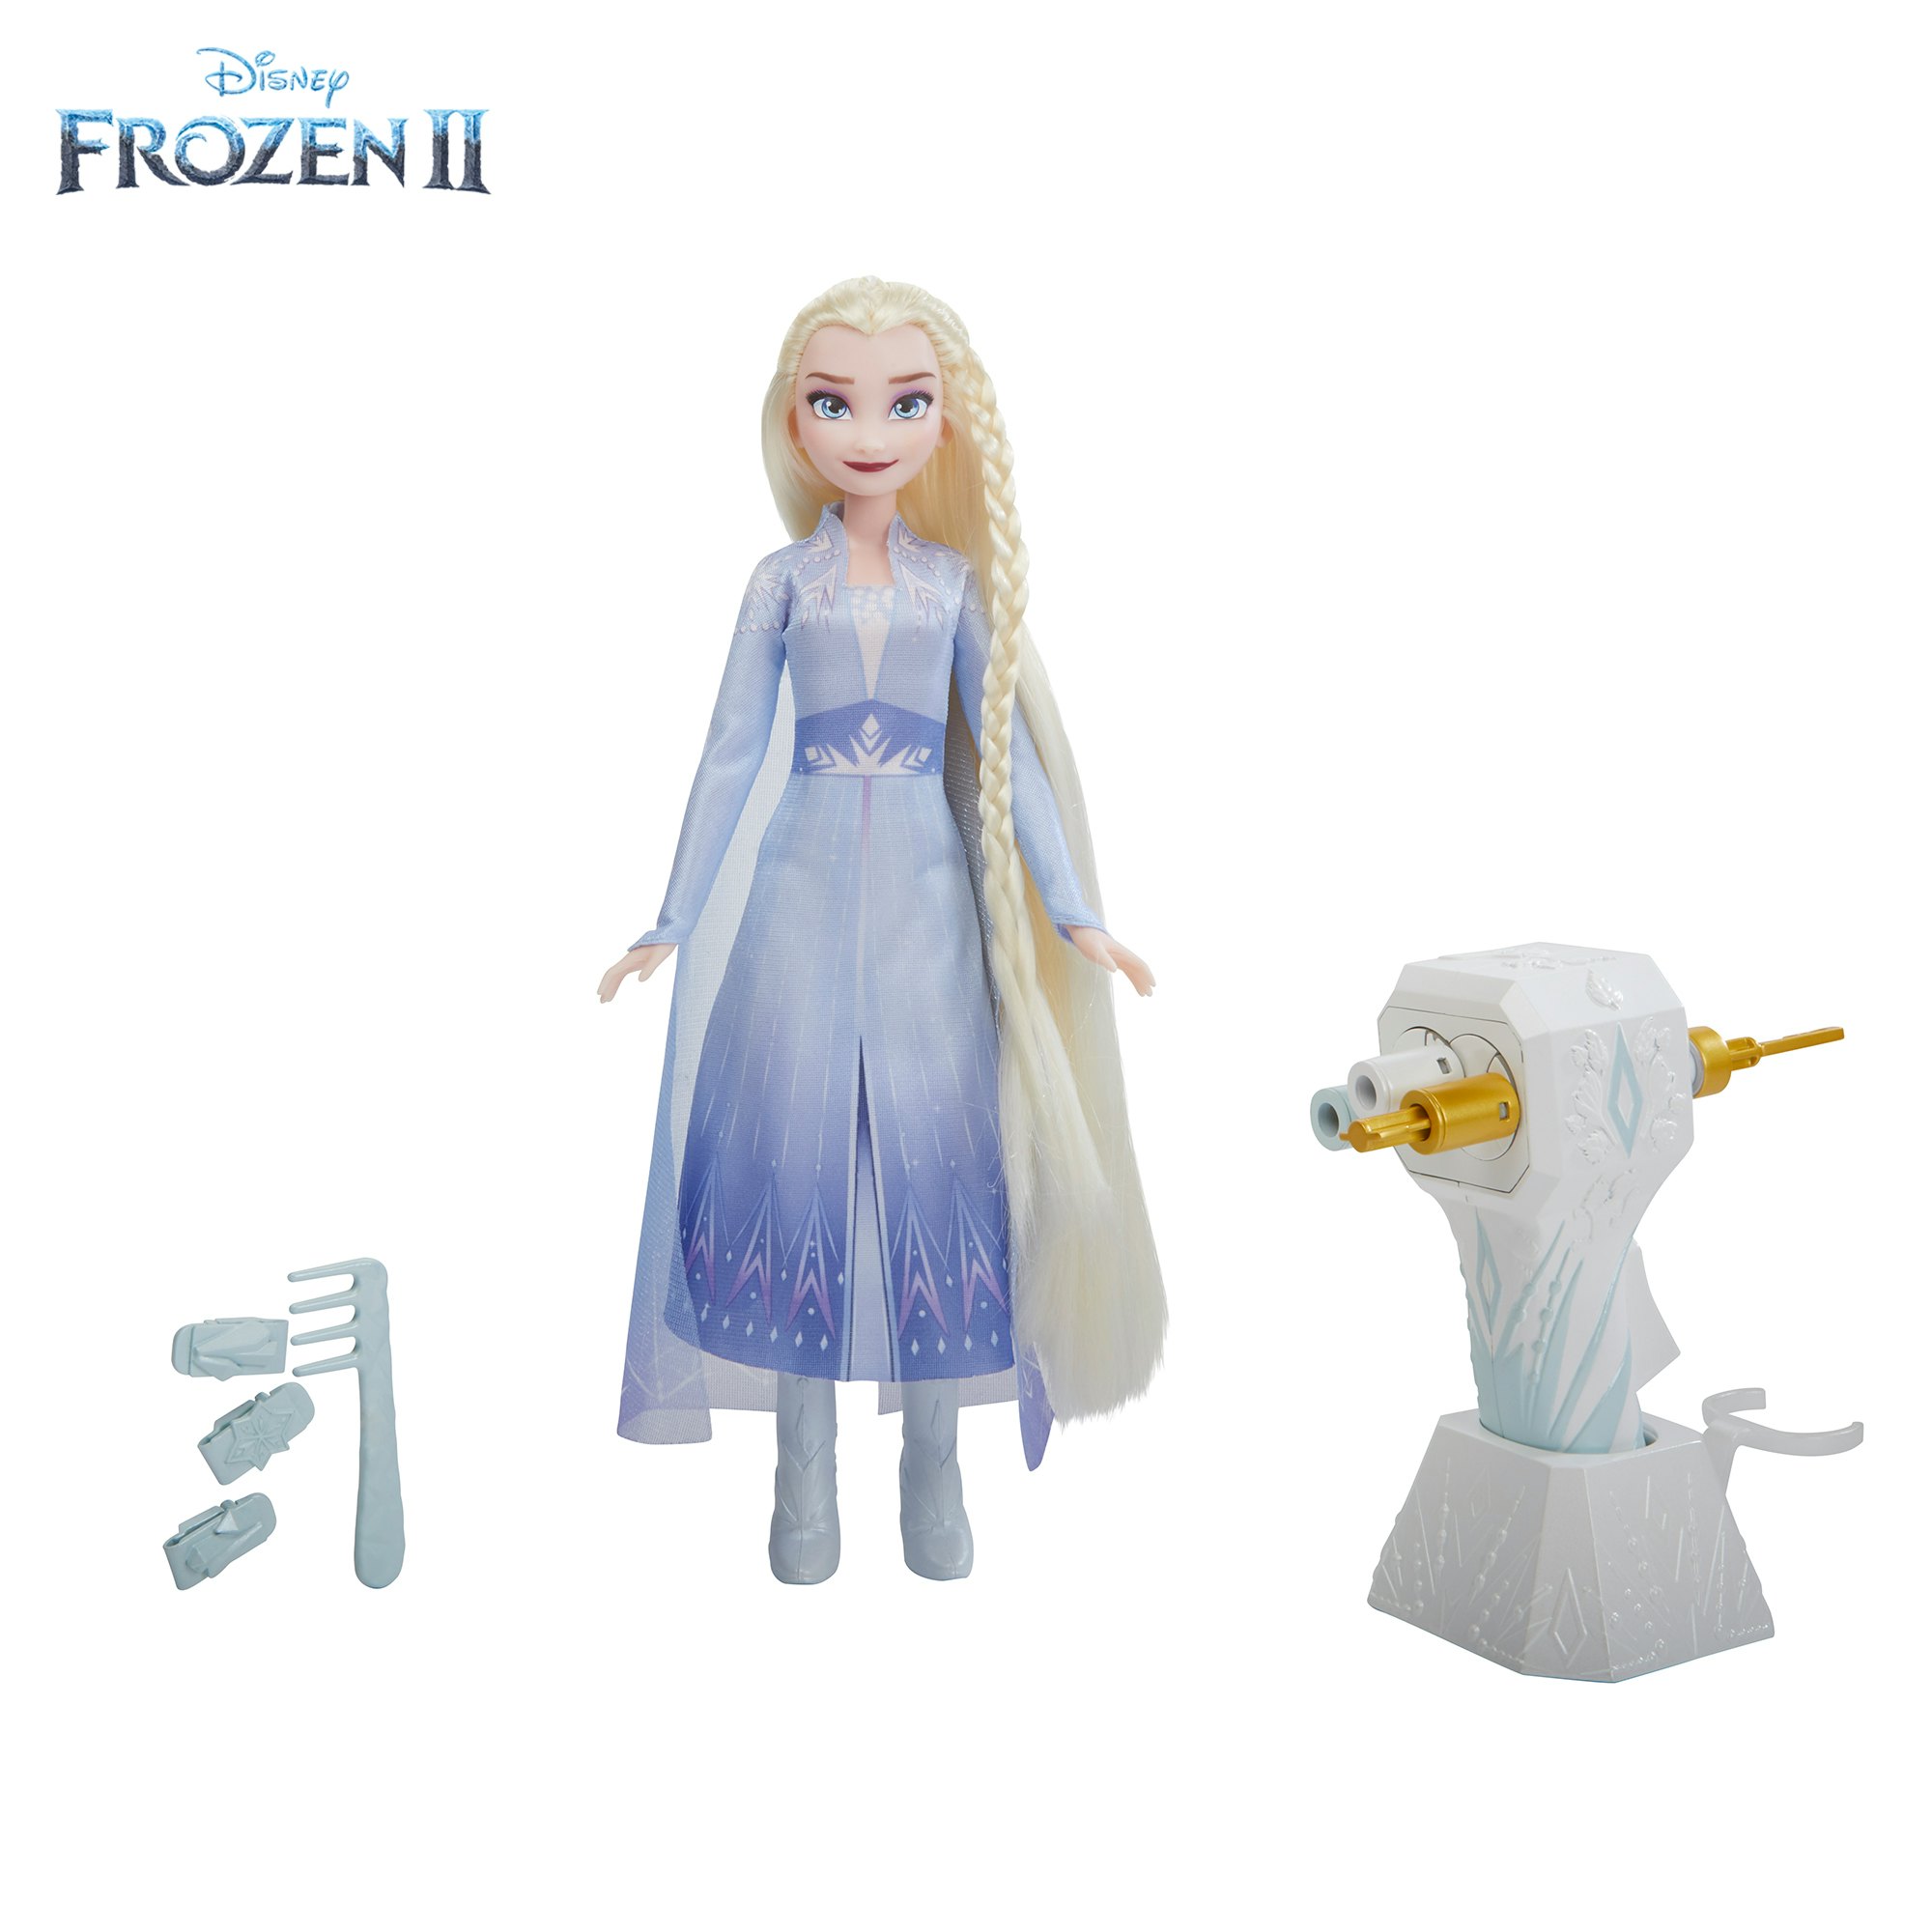 Arozen on Twitter Elsa in Ataholan how its look change so Gorgeous Image  of Frozen 2 Frozen2 Elsa Disney DisneyPlus disneyprincess  httpstcoiM9wn5cz07  X